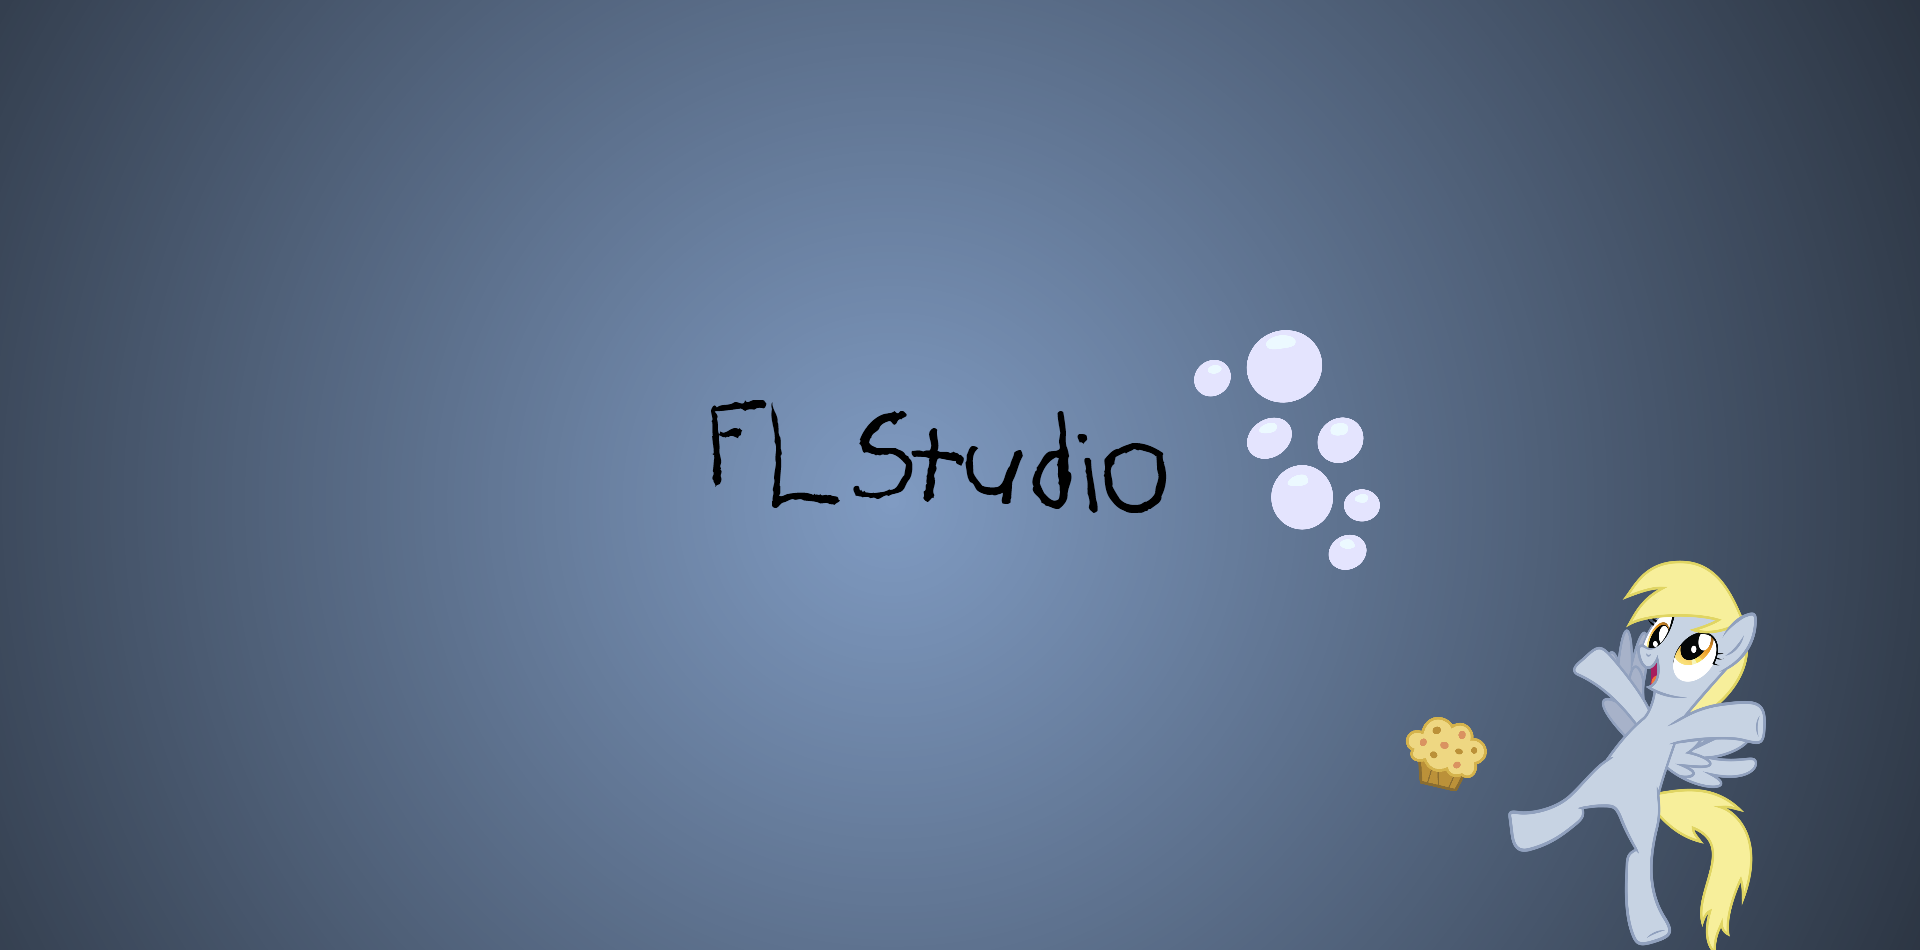 how to change fl studio 12 background